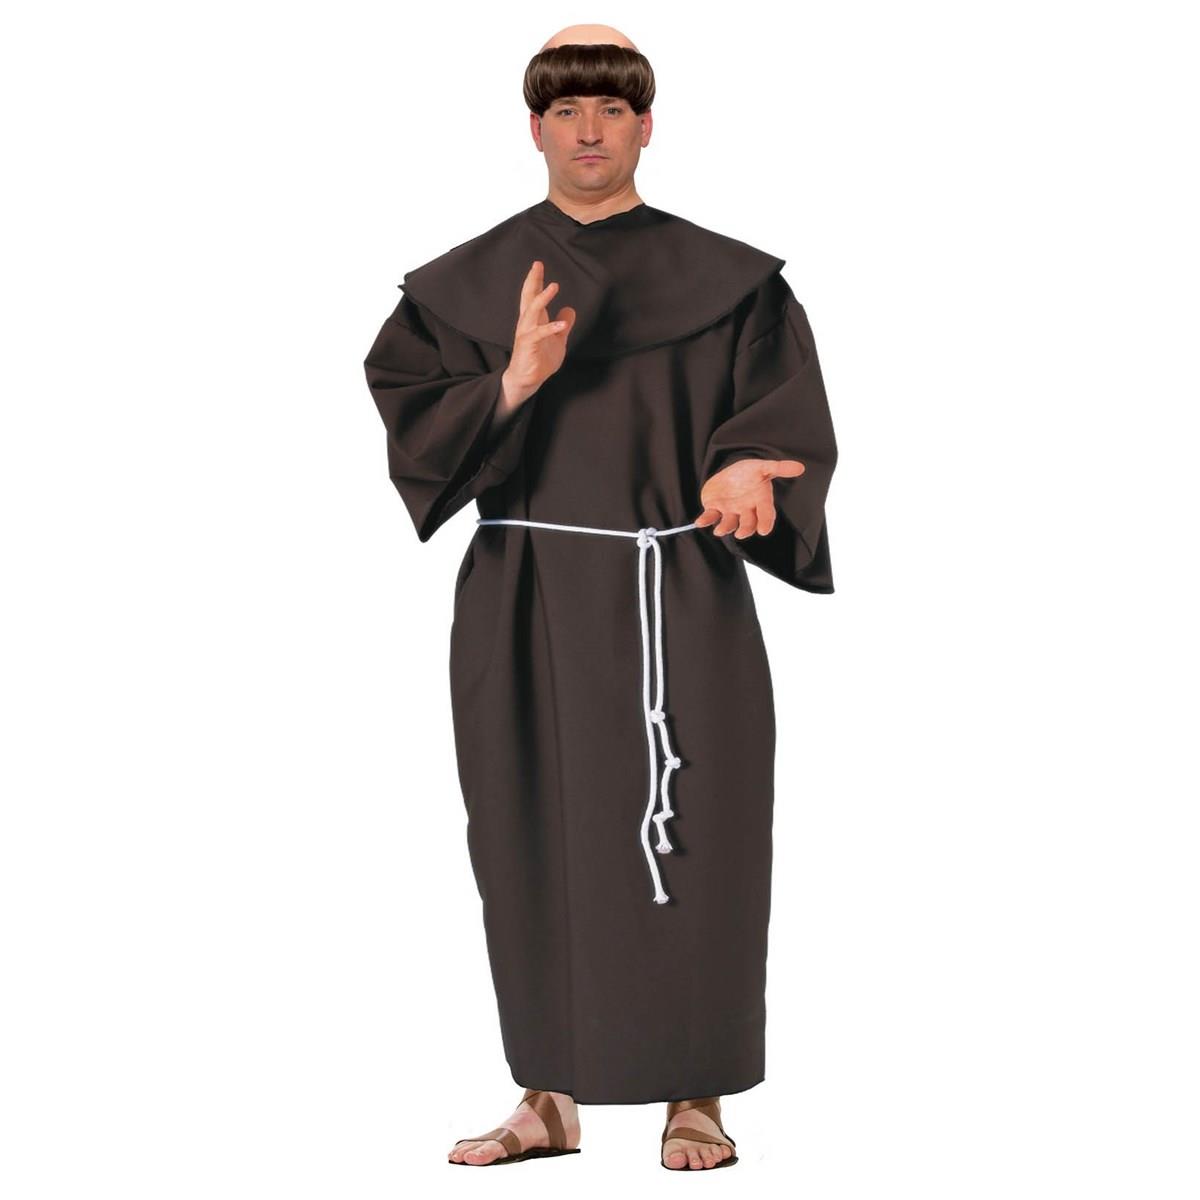 Picture of Forum Novelties 277764 Halloween Adult Plus Size Monk Costume - Standard